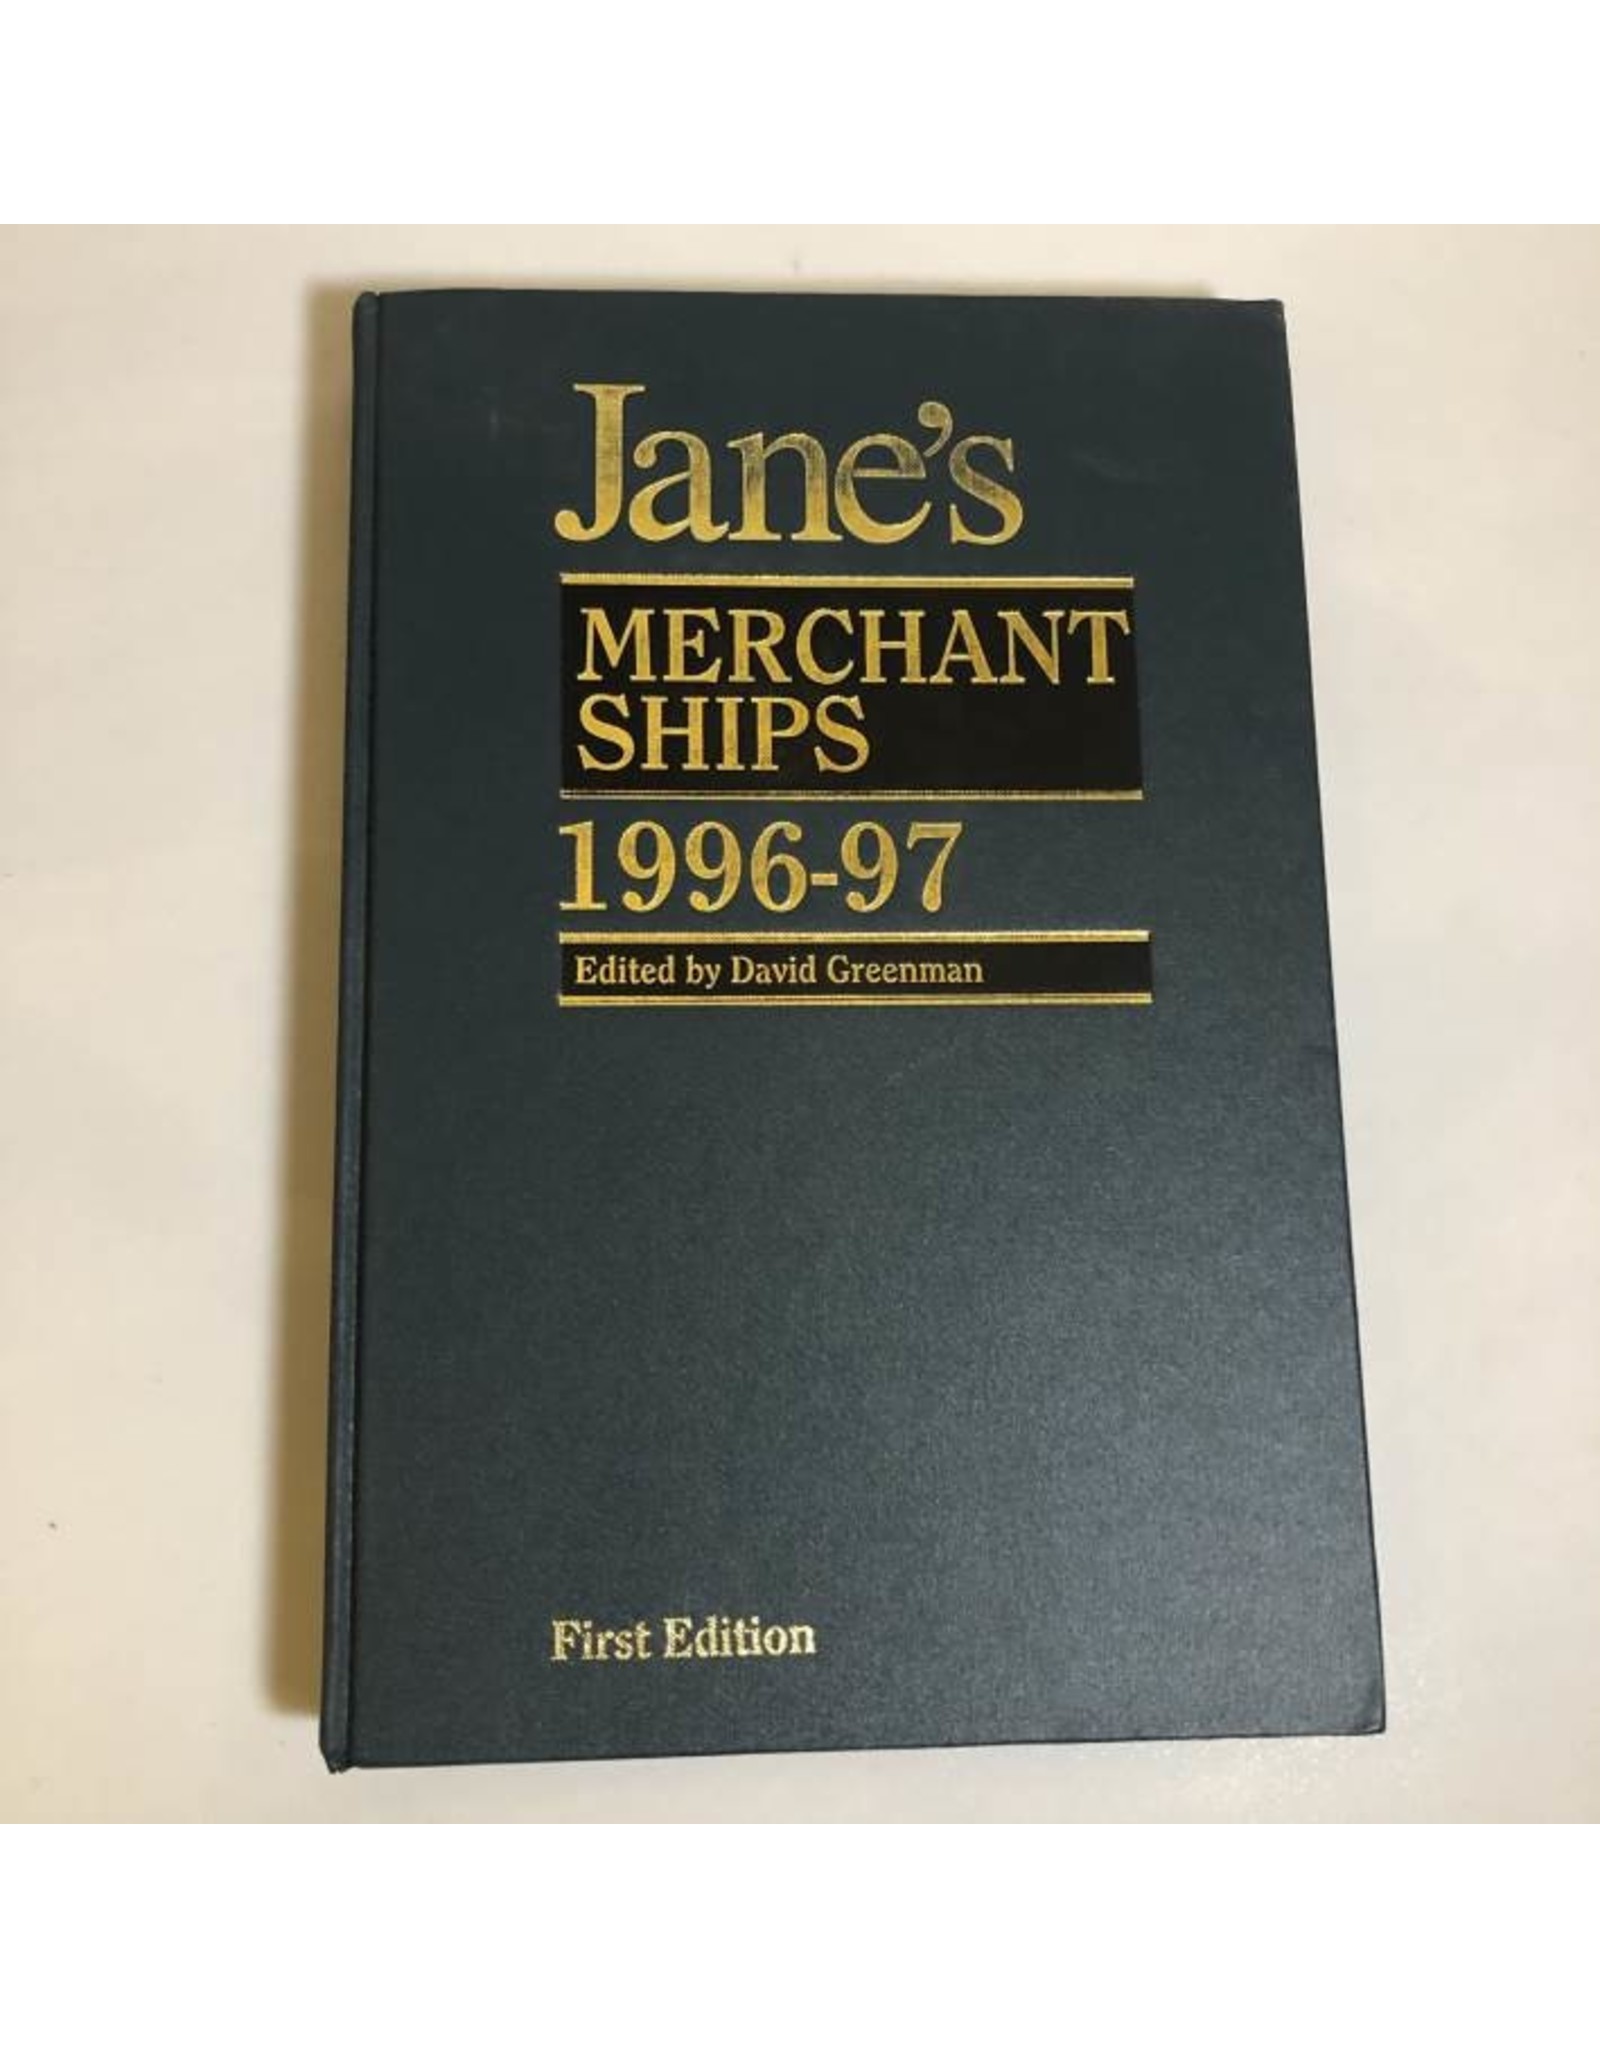 Hardcover book - Jane's Merchant Ships 1996-97